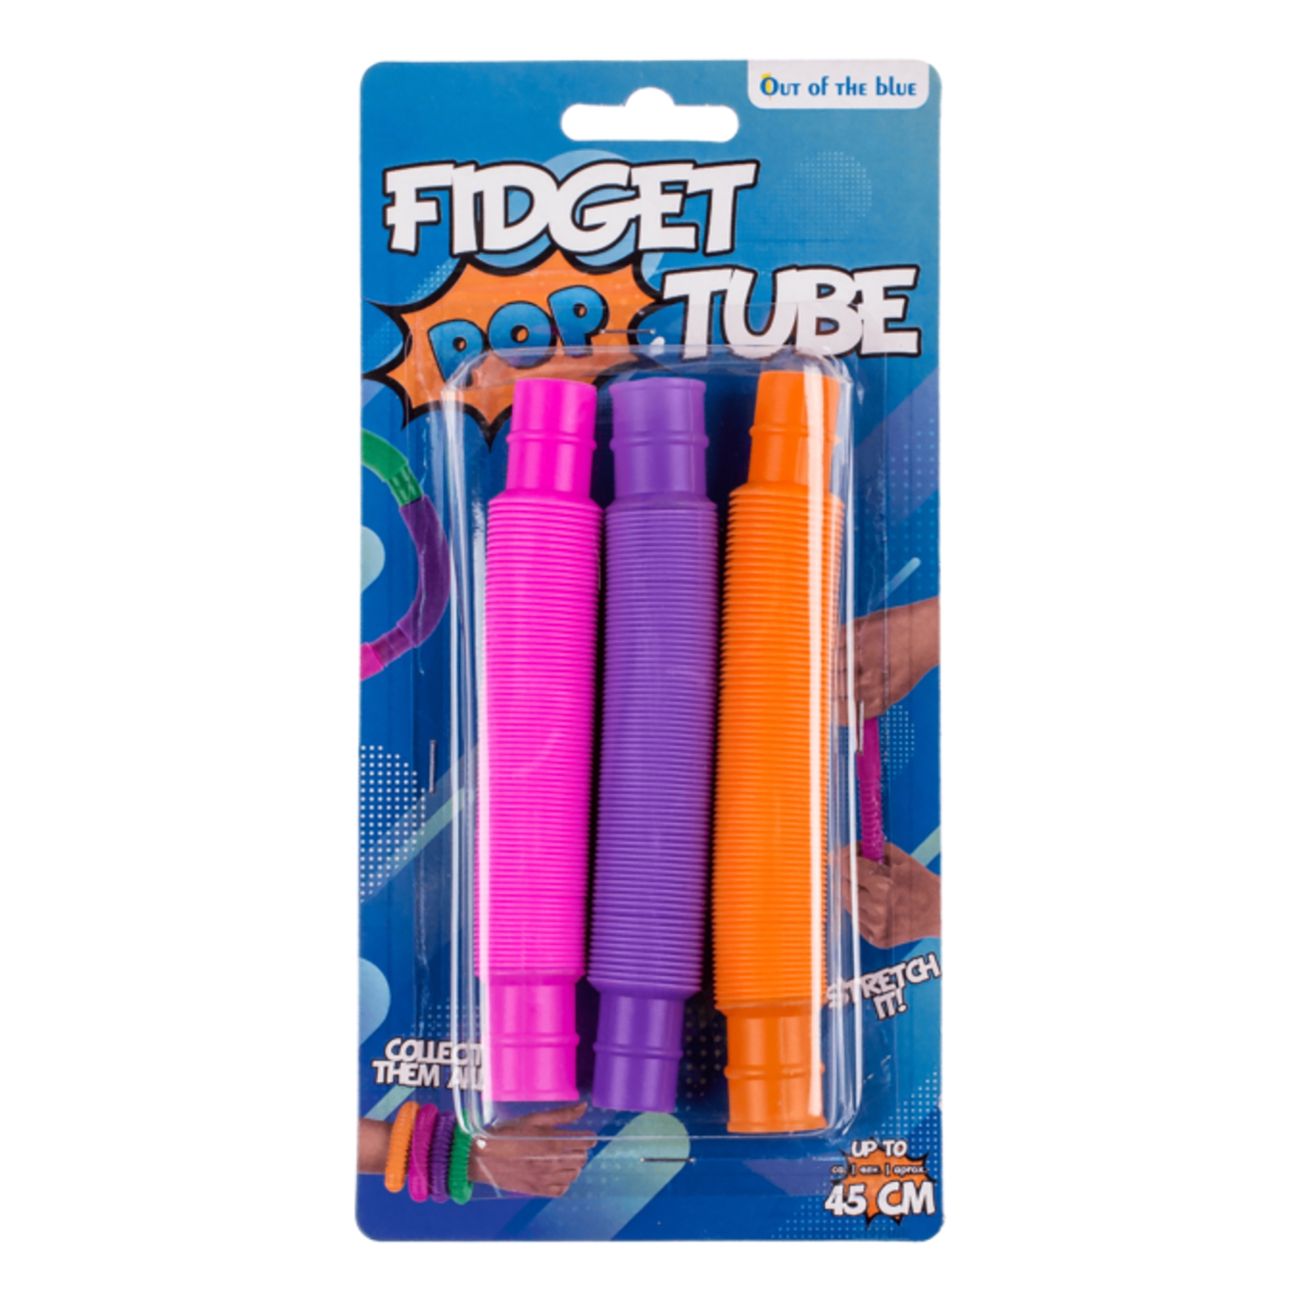 pop-tube-fidget-toy-80047-7